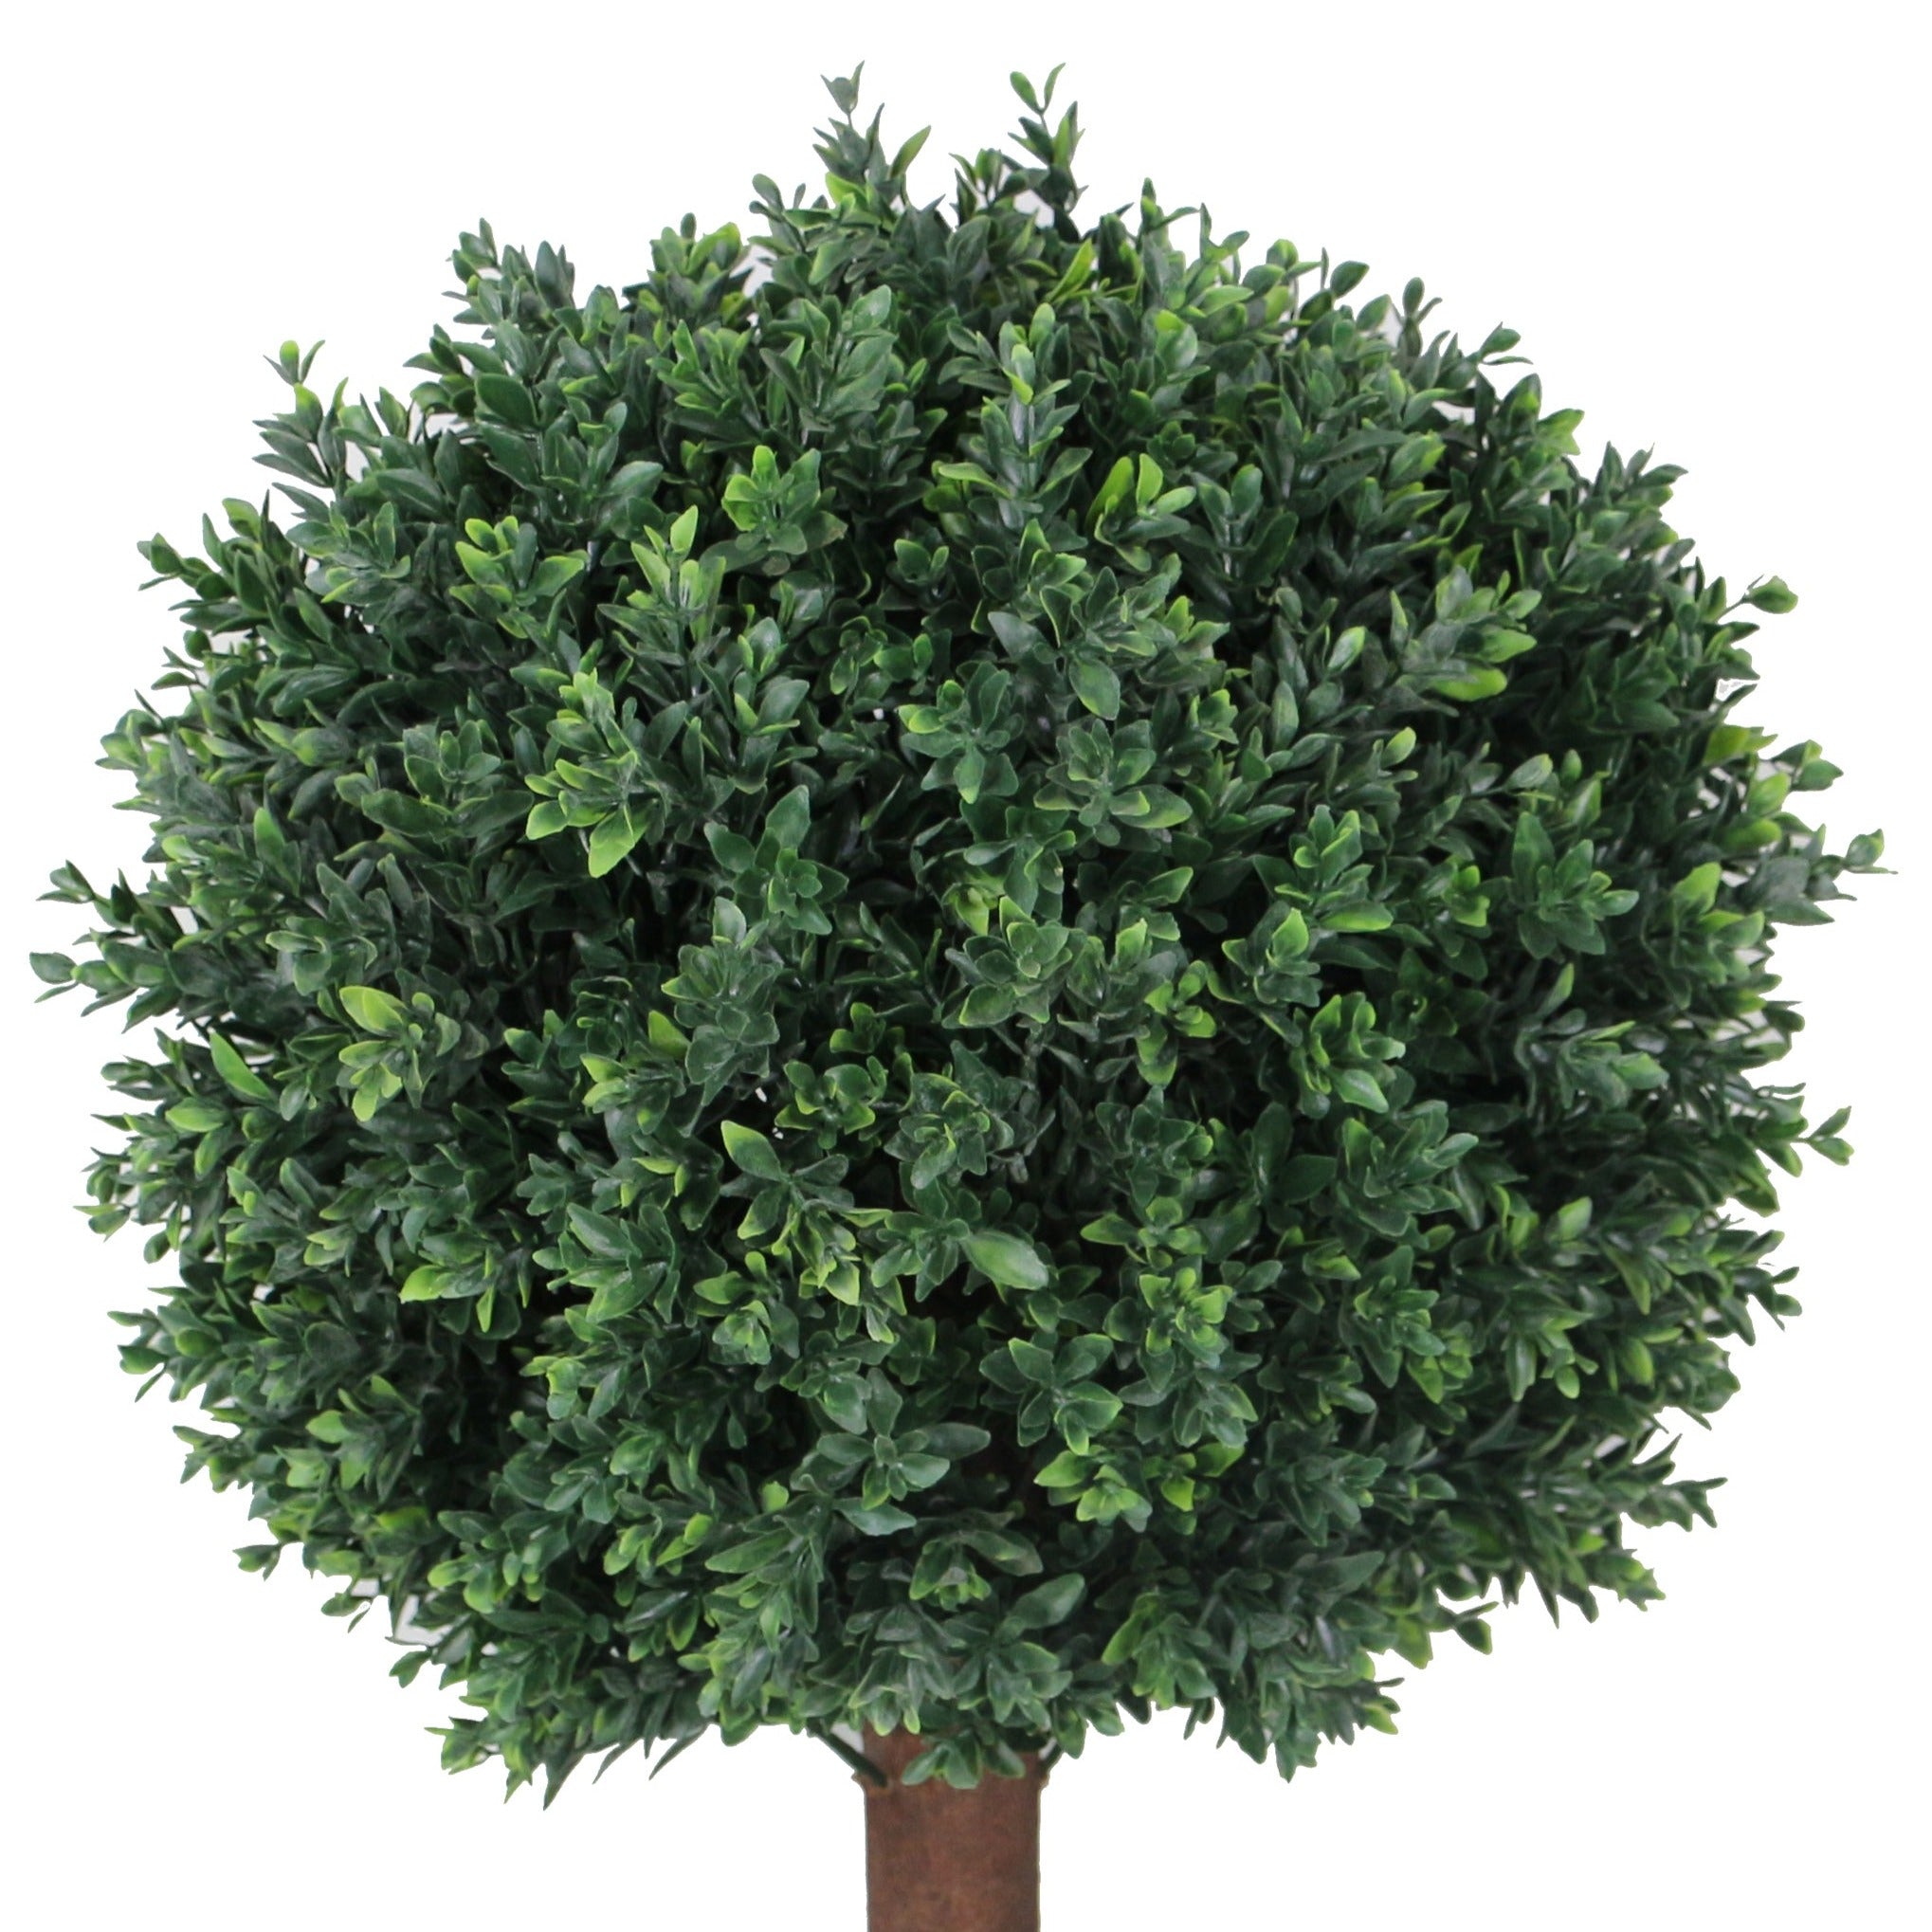 Outdoor Artificial Heyotis Topiary Tree Plant - 60cm